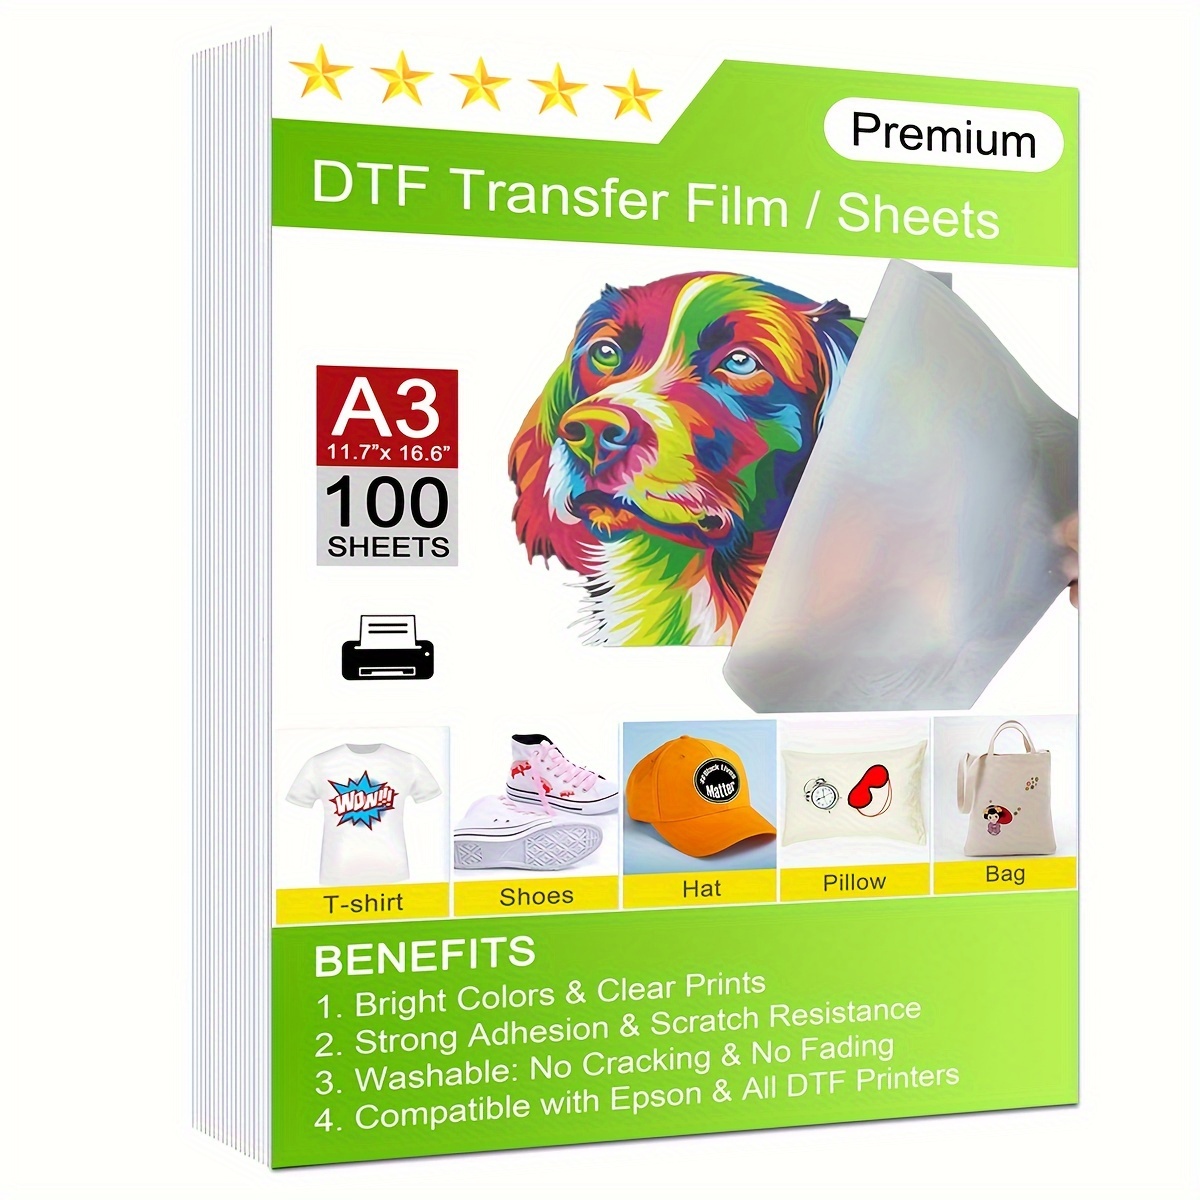 Feuille au format A3 pour transfert DTF ( Direct to Film )